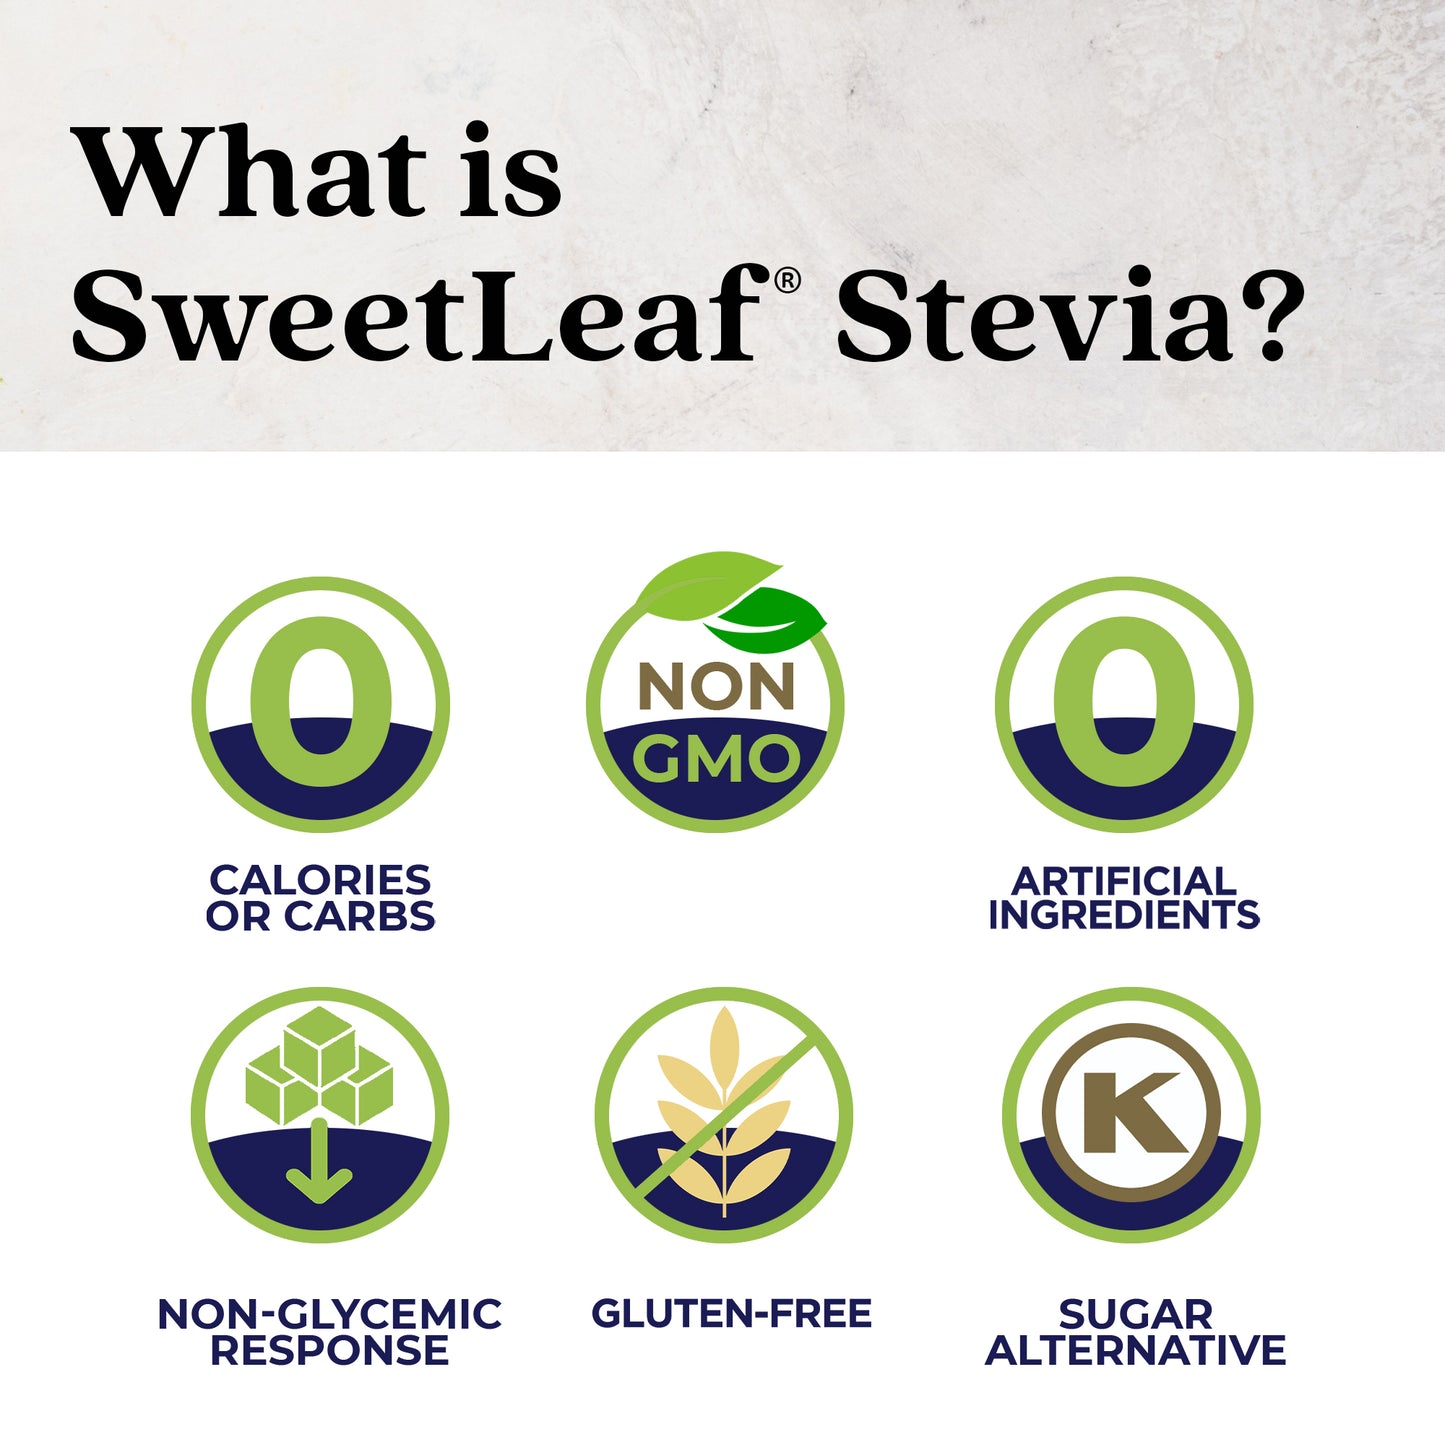 Organic Stevia Sweetener, 70 packets